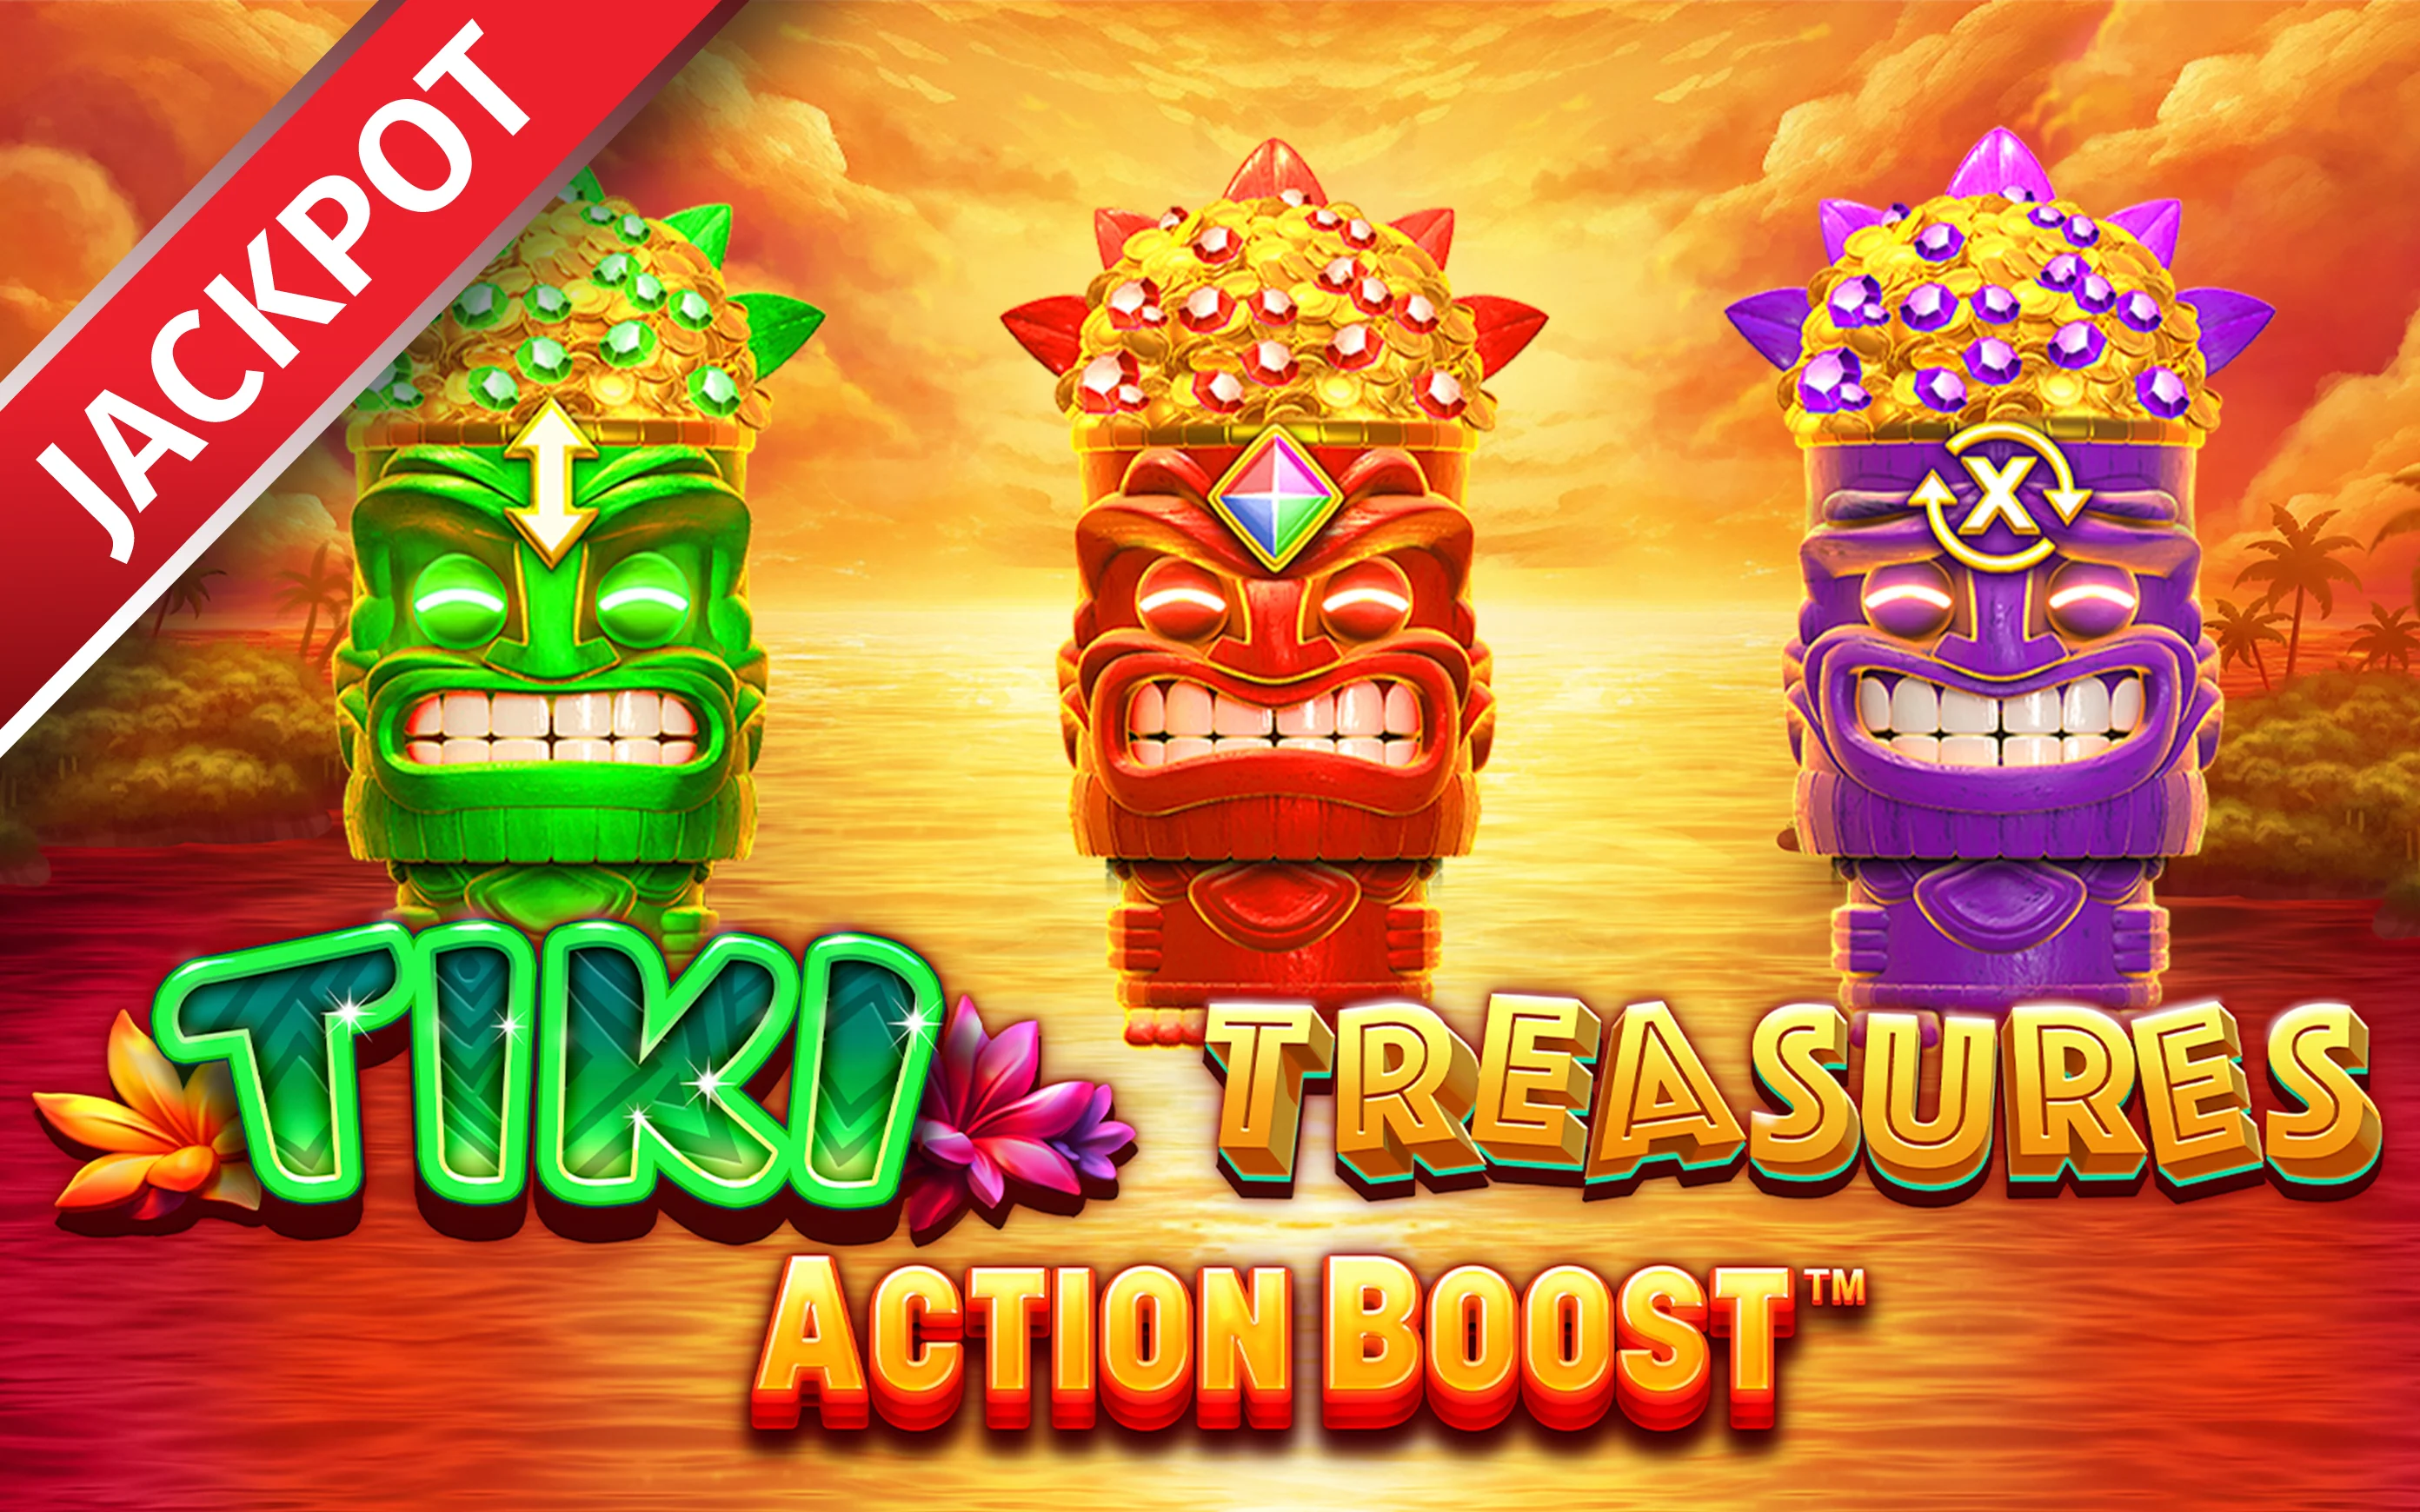 Играйте в Action Boost™ Tiki Treasures в онлайн-казино Starcasino.be